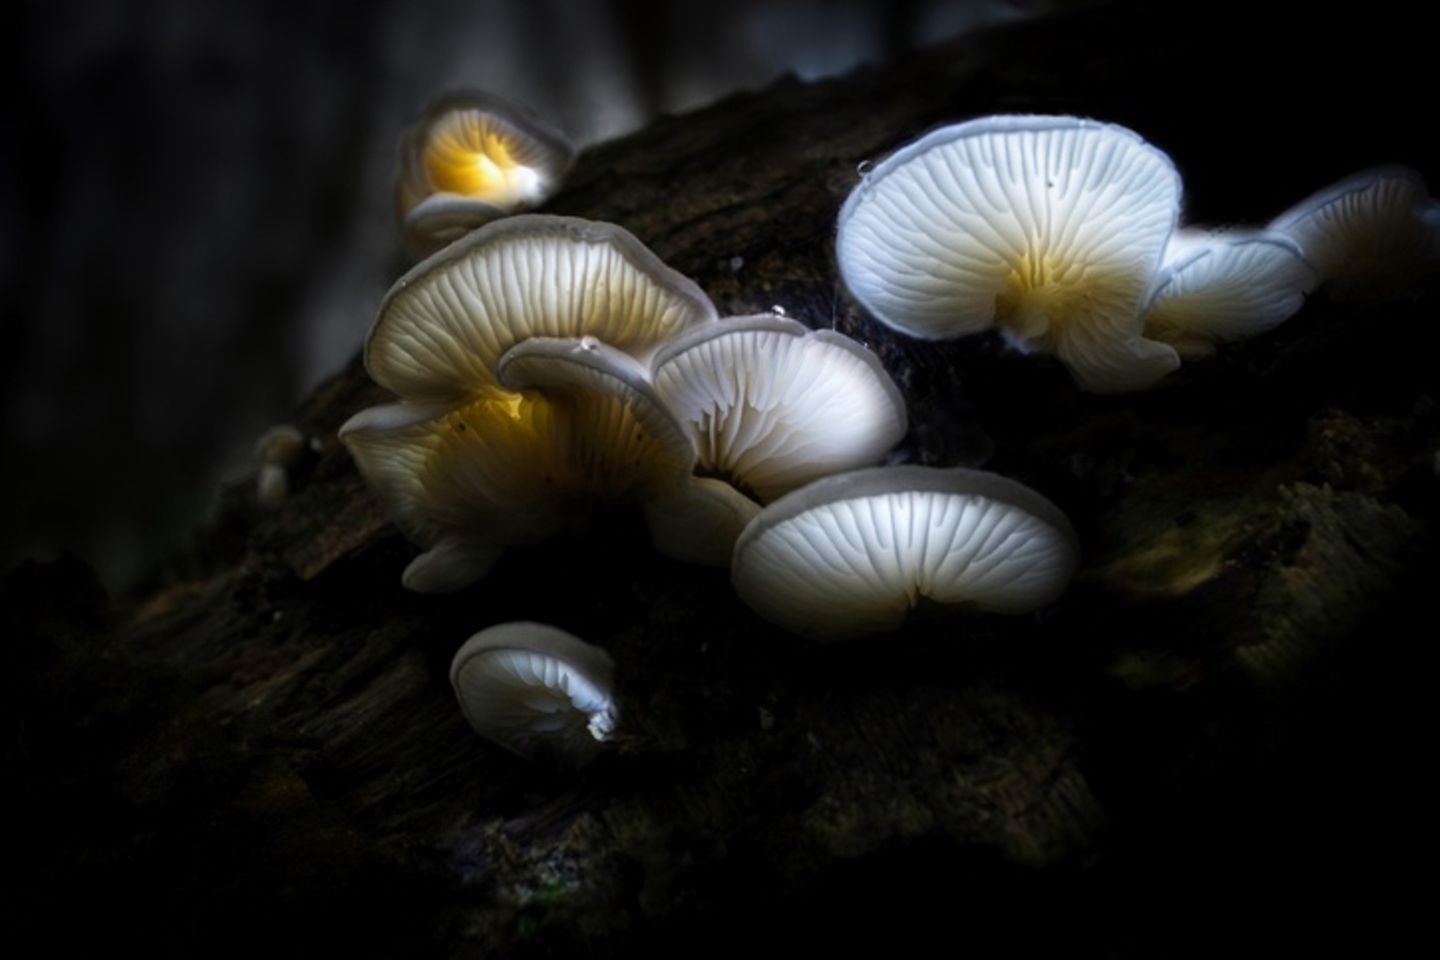 Light transparent mushrooms growing on dark soil